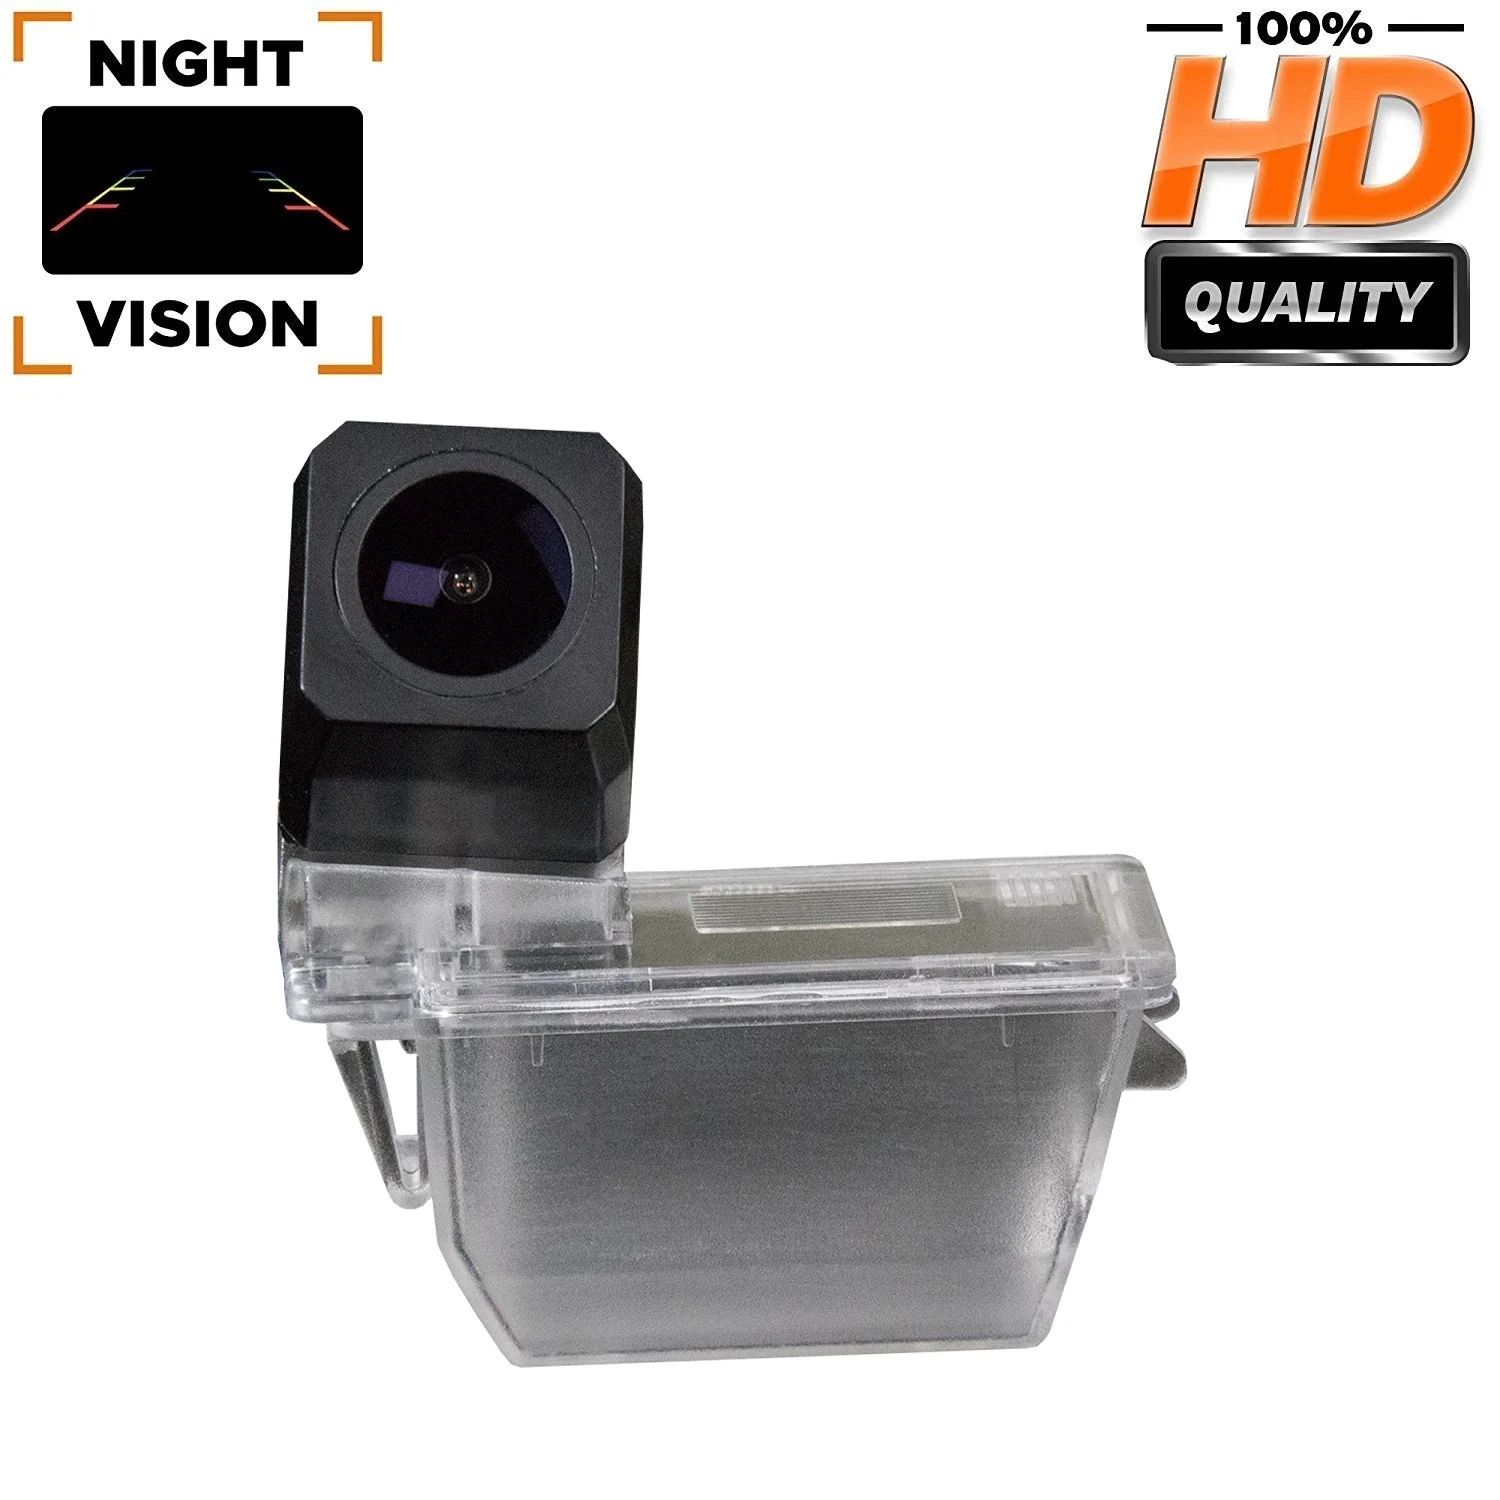 

HD 720P Rear View Night Vision Parking Camera for FORD Kuga 2013-2015, License Plate Light Reversing Backup Waterproof Camera